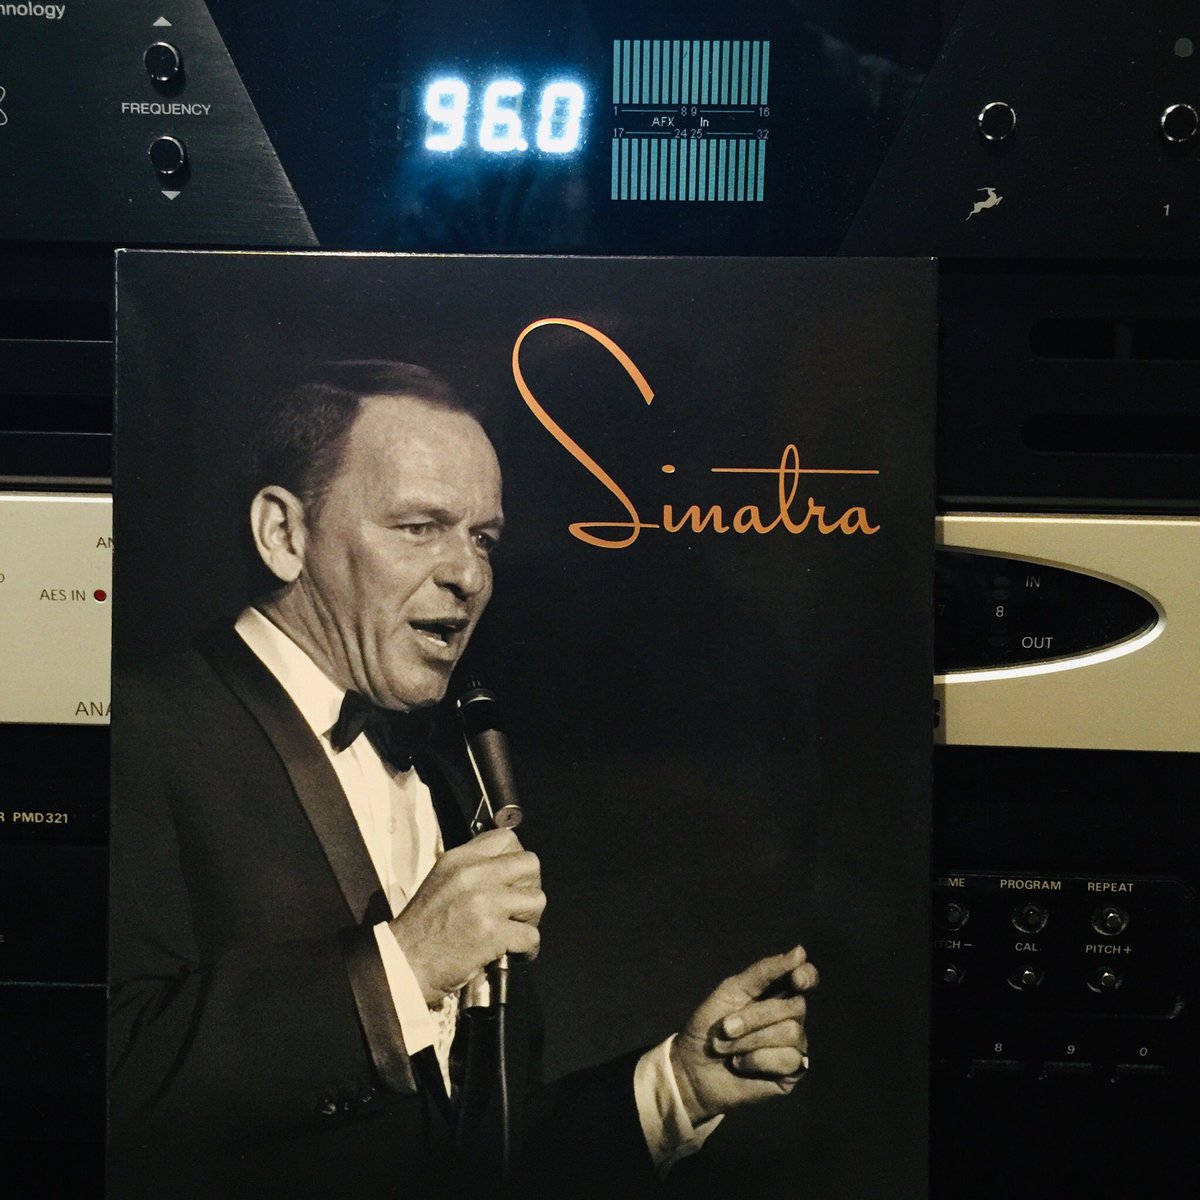 Celebrating Frank Sinatra on his birthday. 
One of my favorite vocalists. 

#franksinatra #oleblueeyes #frank #celebratemusic #music 
Vibbertsmixing.com